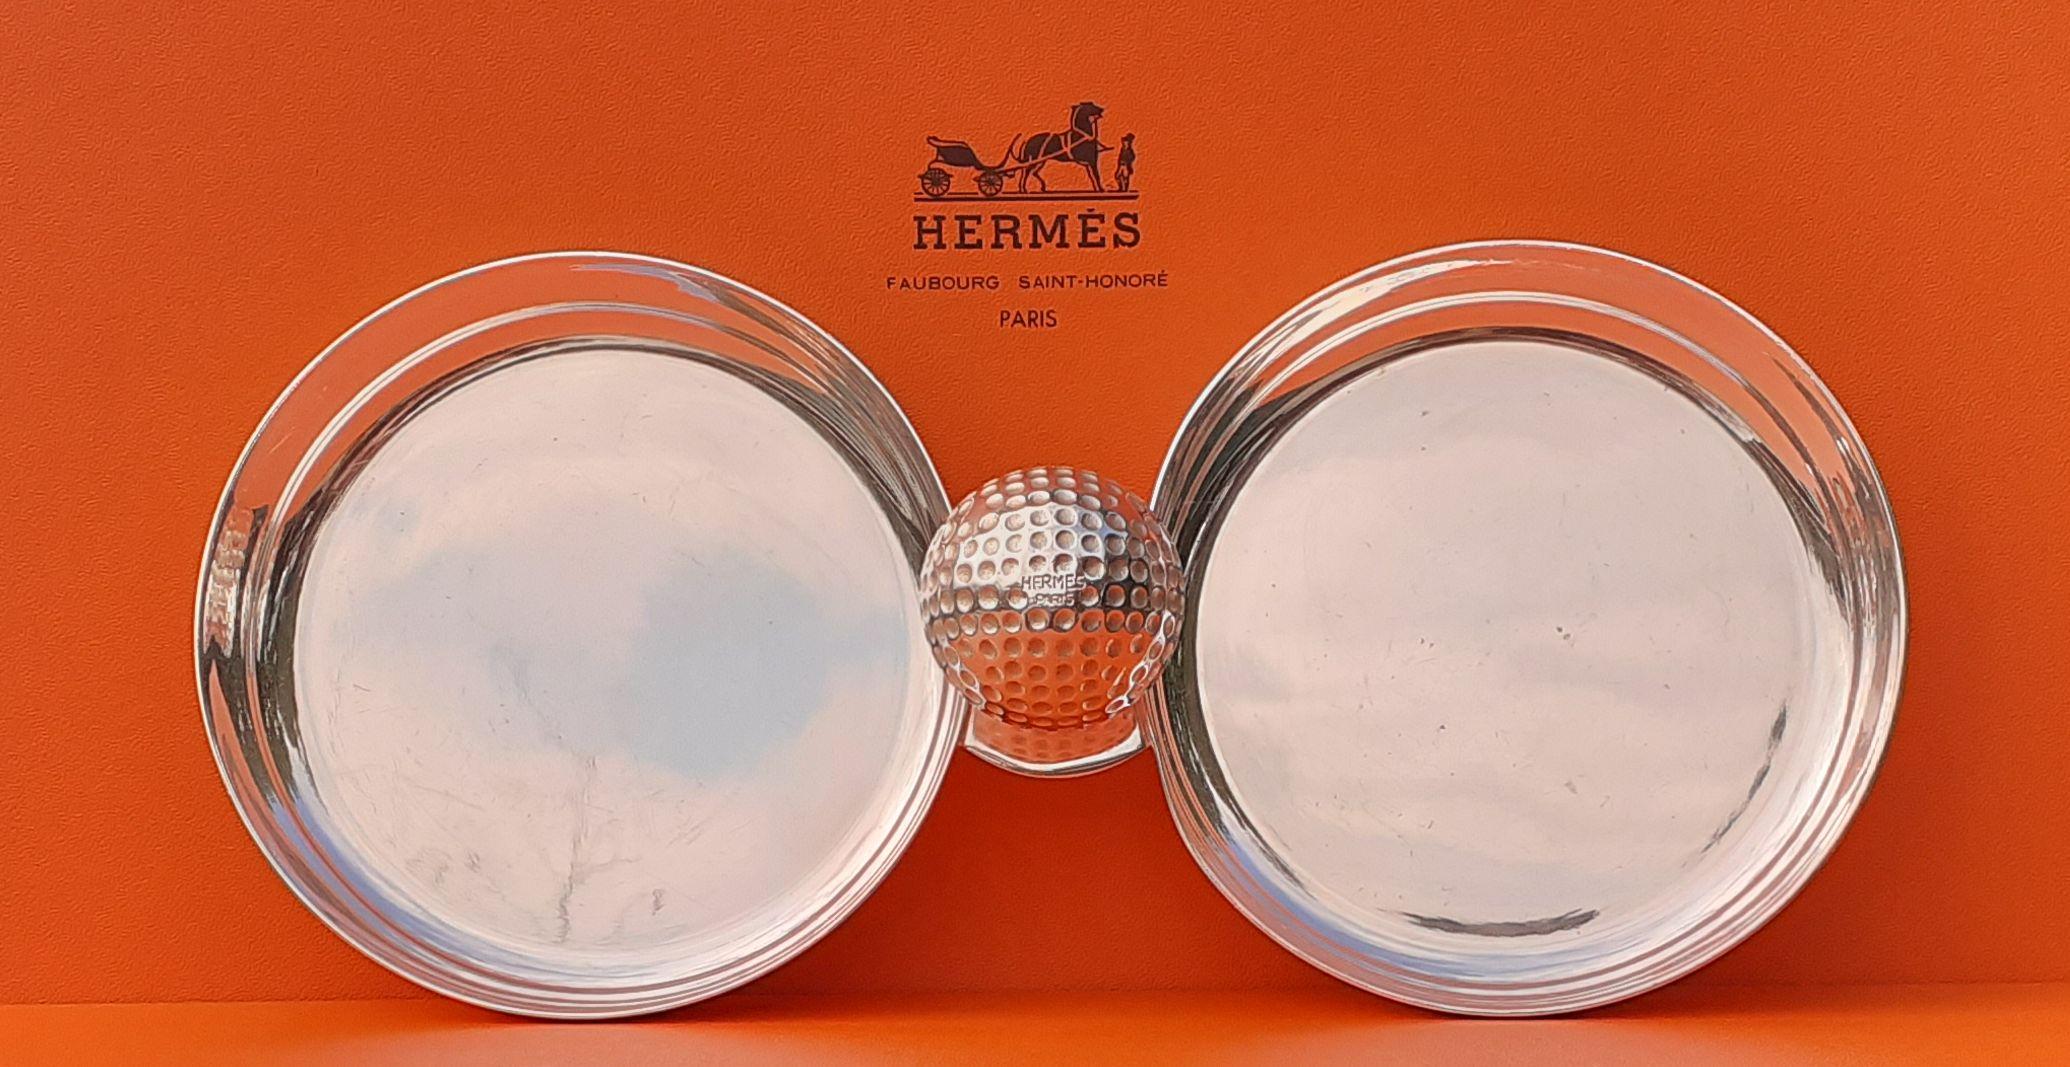 Exceptional Hermès Saucer or Change Tray Golf Pattern Ravinet d'Enfert Rare 1